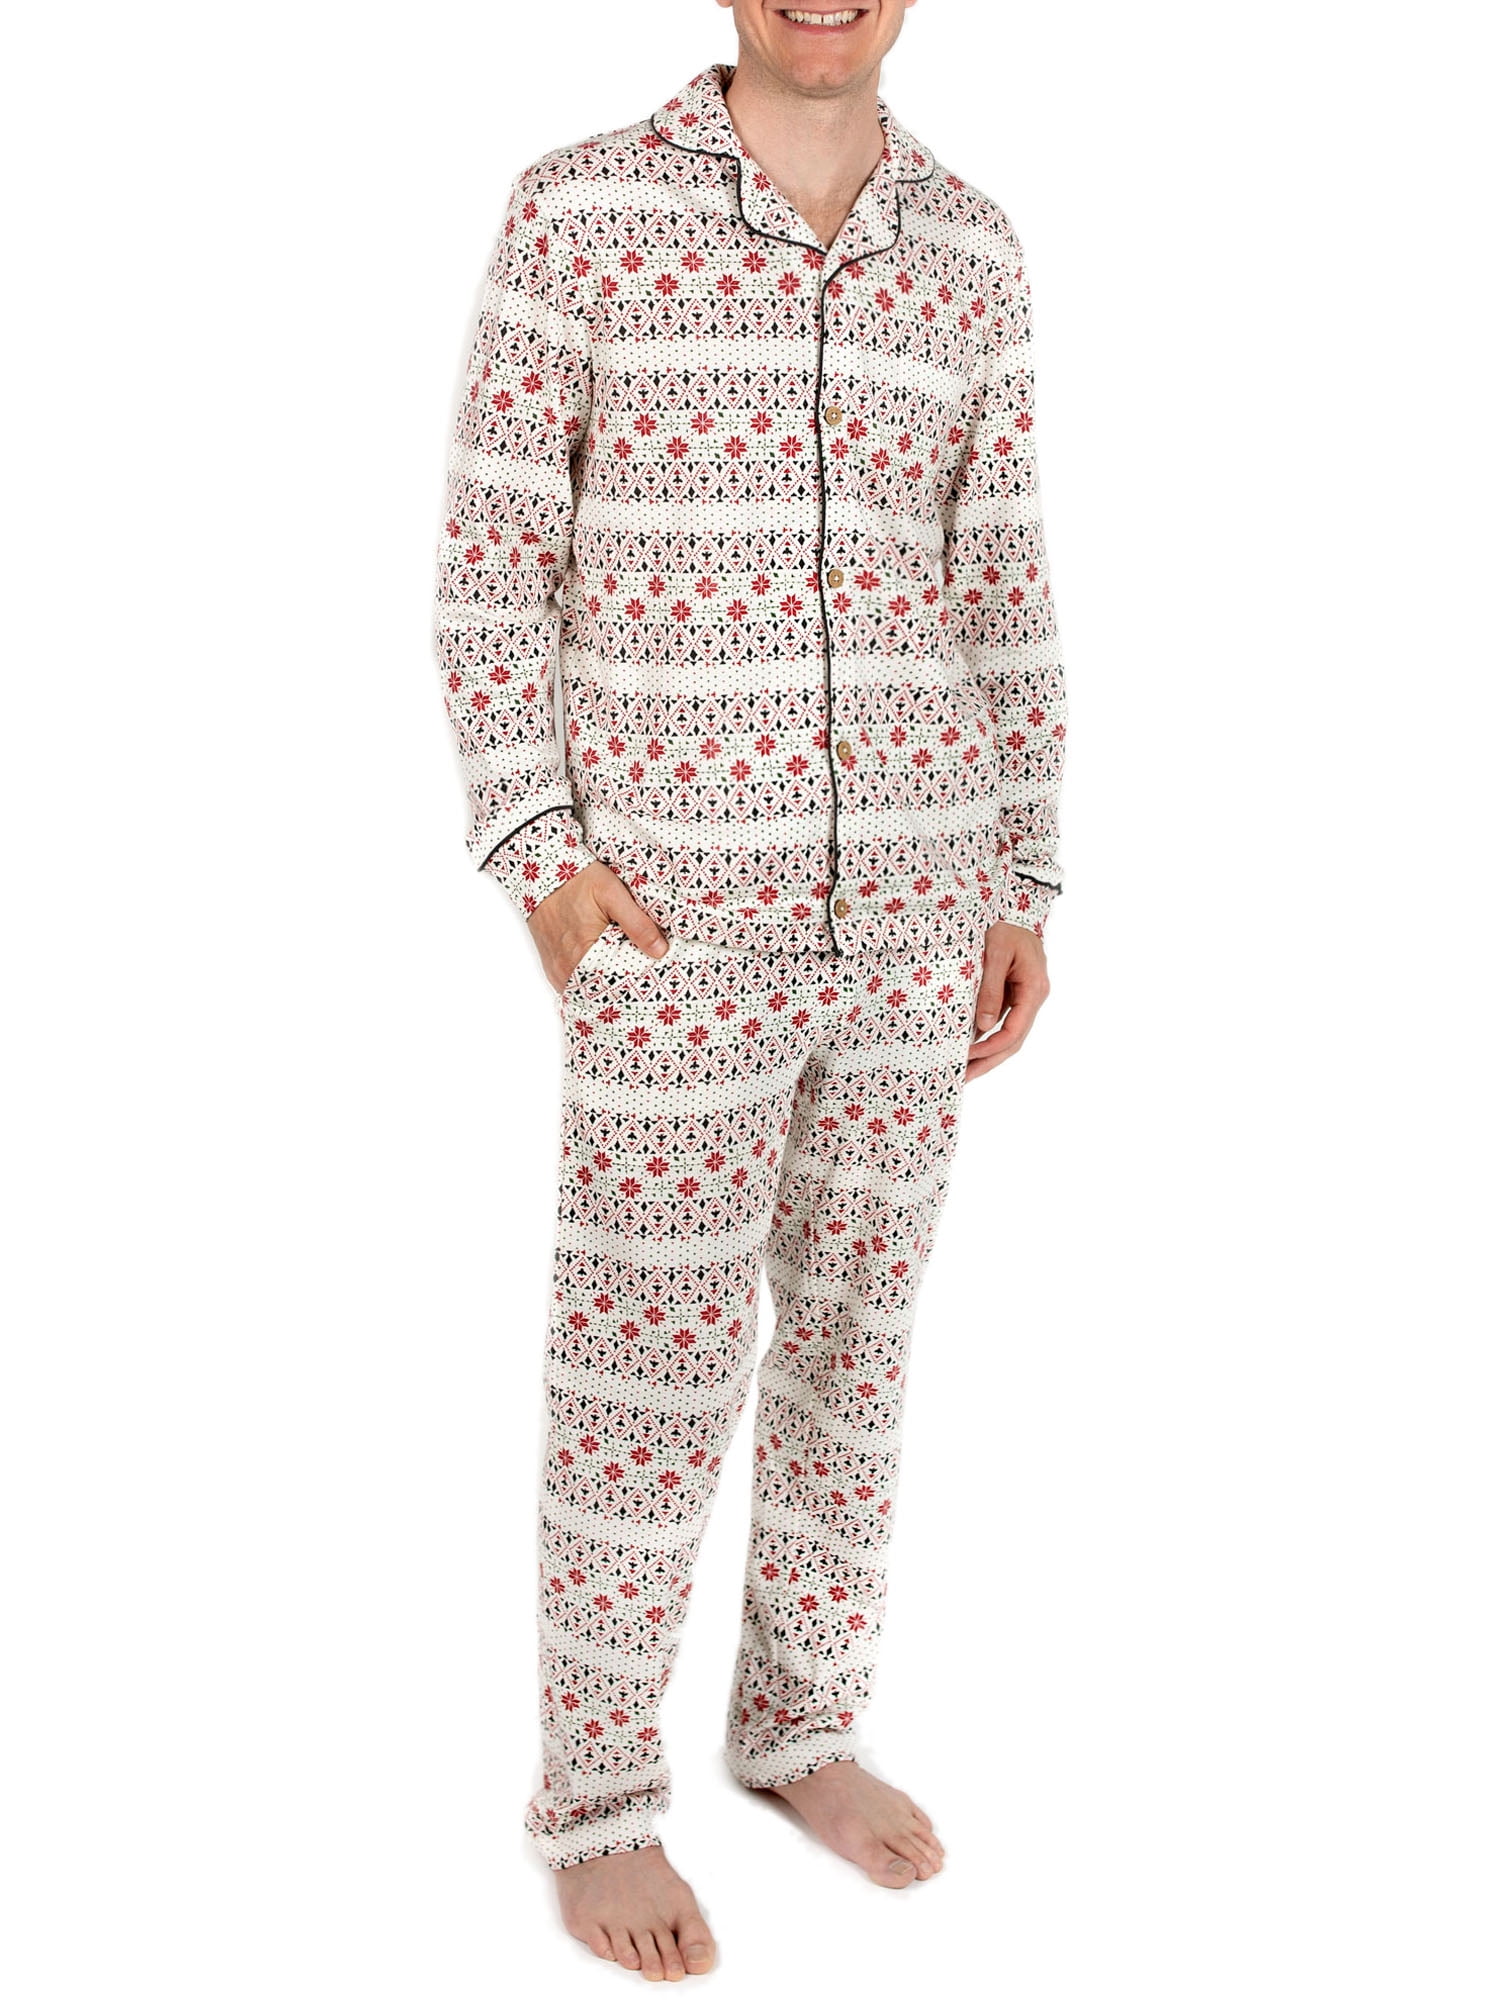 Men's Pyjama's with Jersey Top and Fleece Trousers in Fairisle Print 